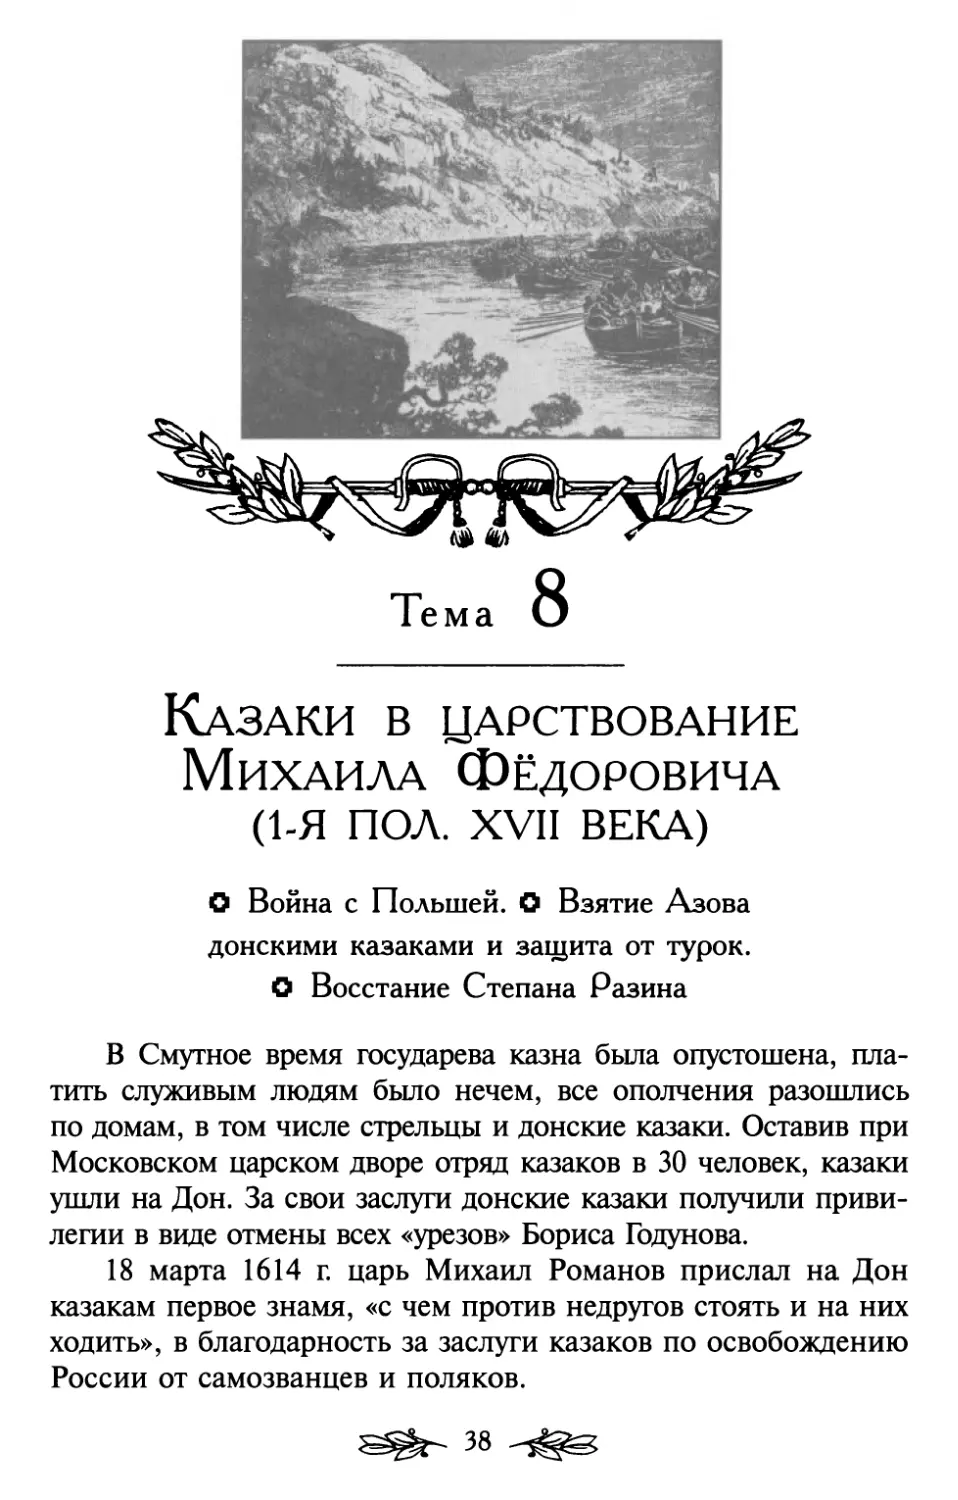 Тема 8. Казаки в царствование Михаила Фёдоровича (1-я пол. XVII века)